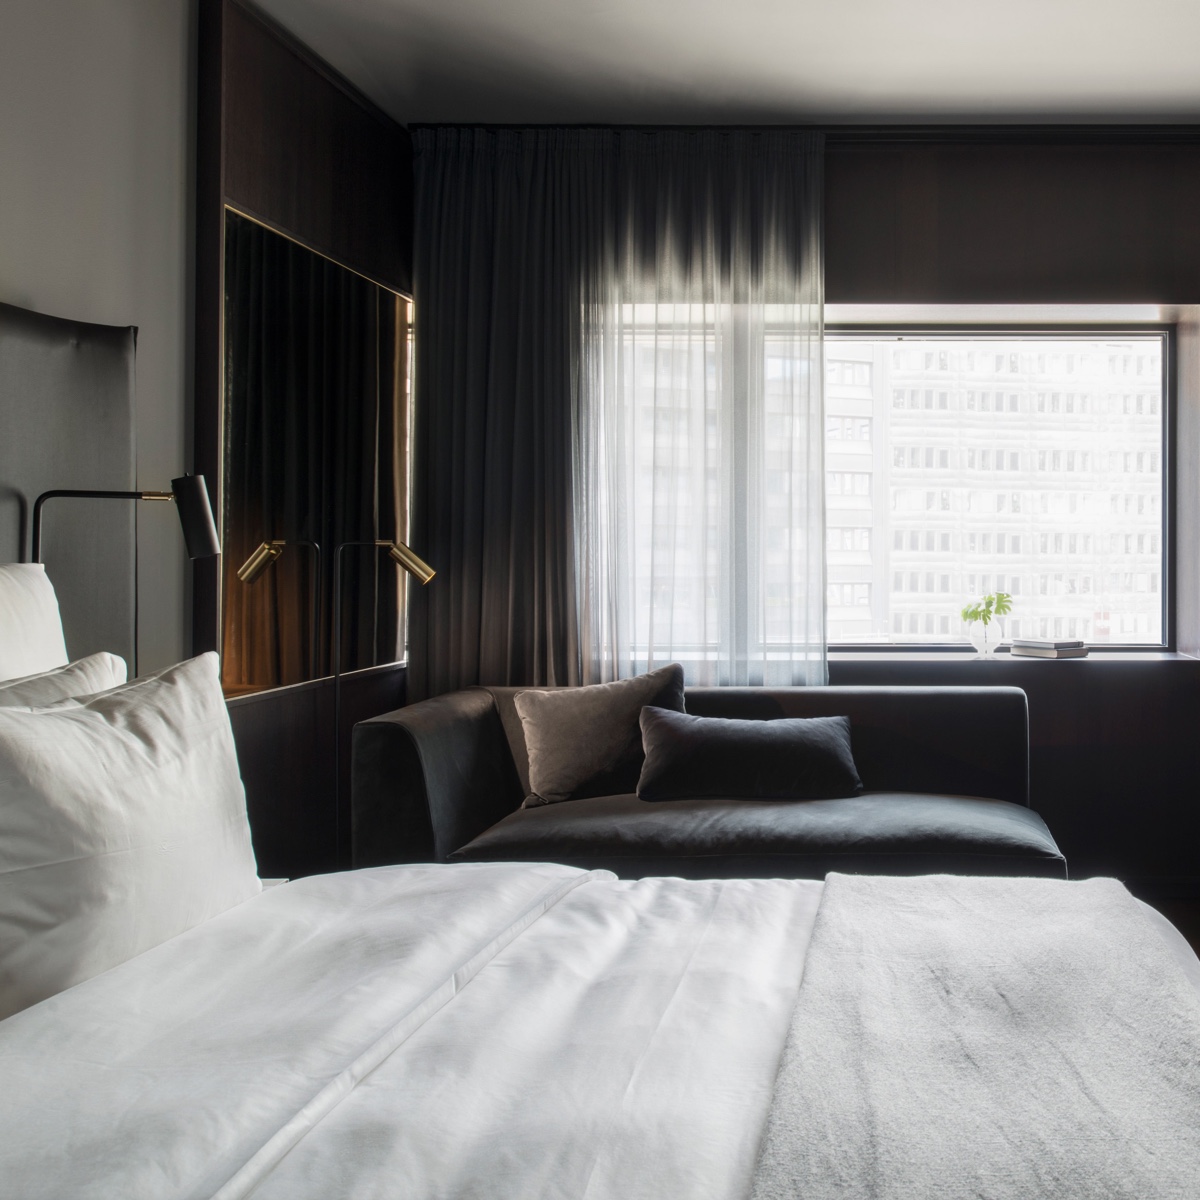 at-six-hotel-universal-design-studio-interiors-stockholm-sweden_dezeen_sq-c